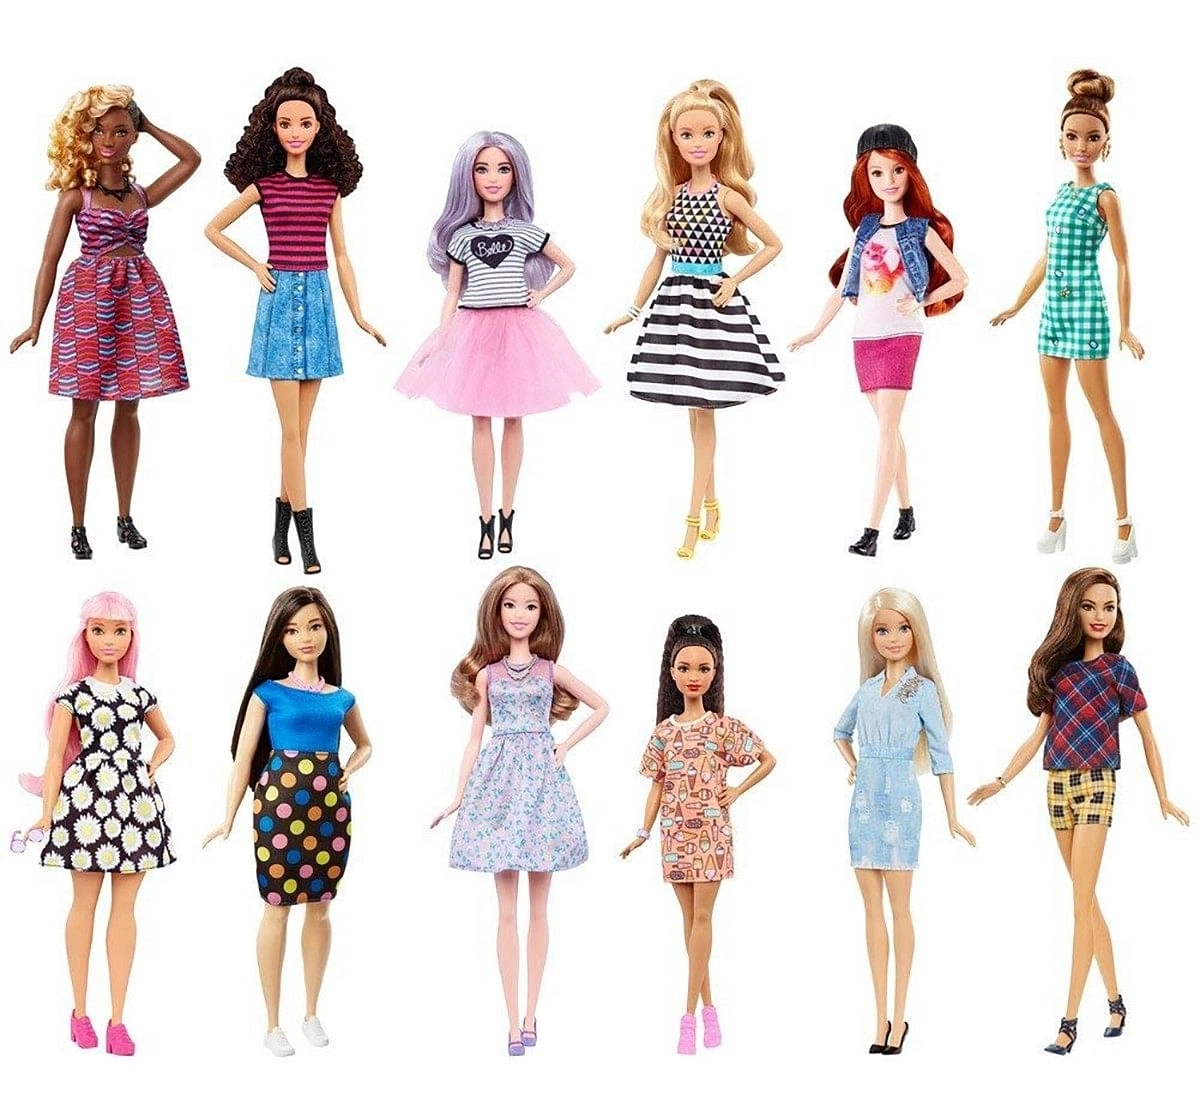 Barbie Fashionista Doll Ast Dolls & Accessories for Girls age 3Y+, Assorted